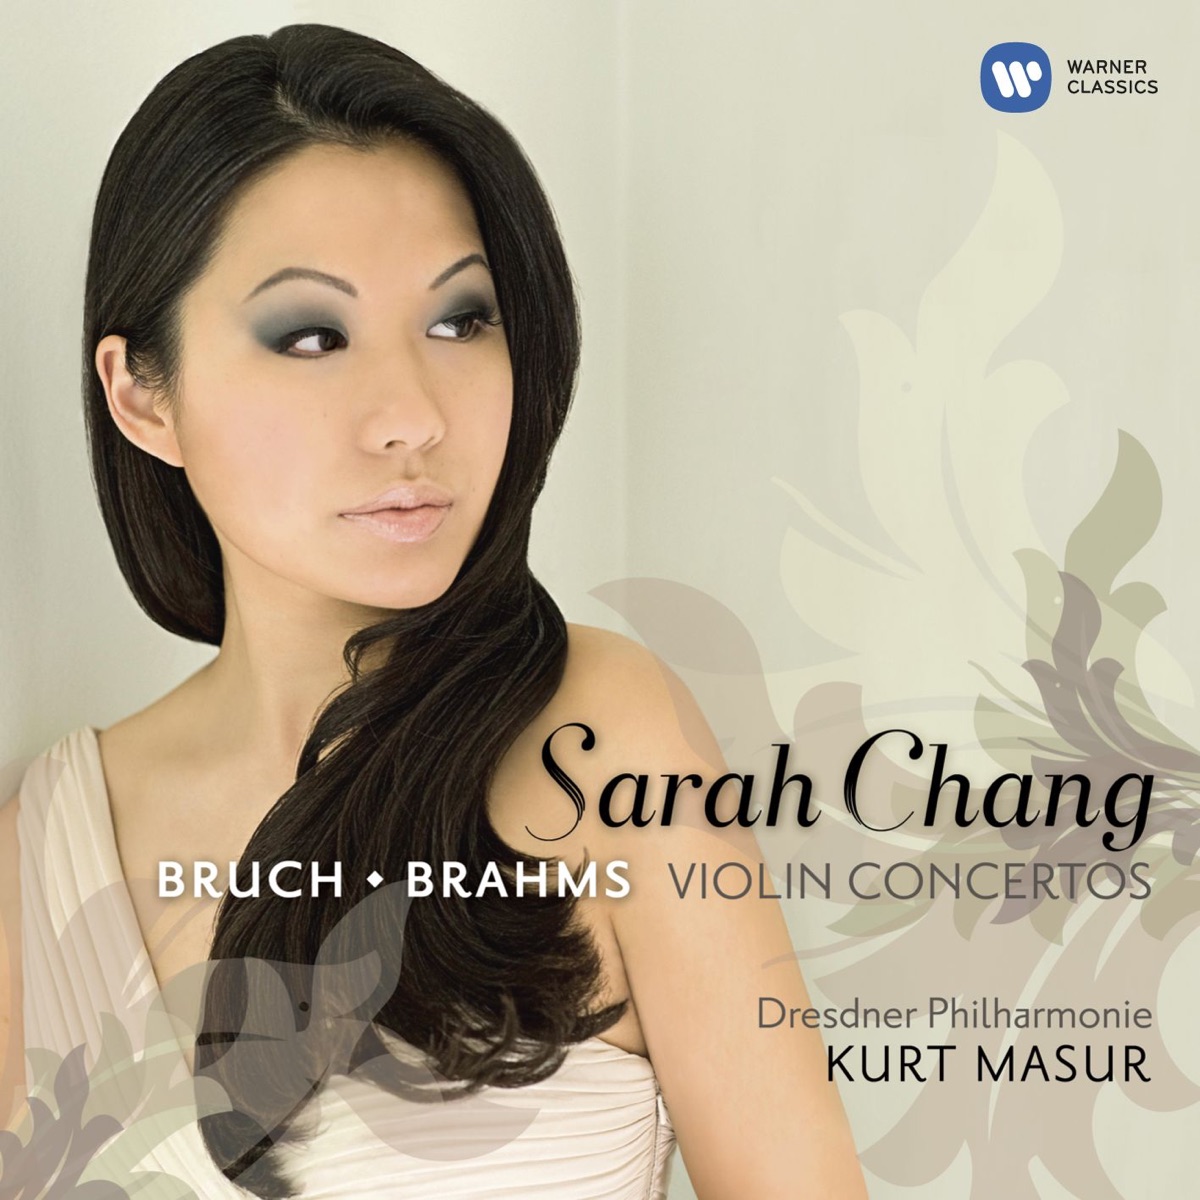 Bruch/Brahms: Concertos by Sarah Dresdner Philharmonie & Kurt Masur on Apple Music